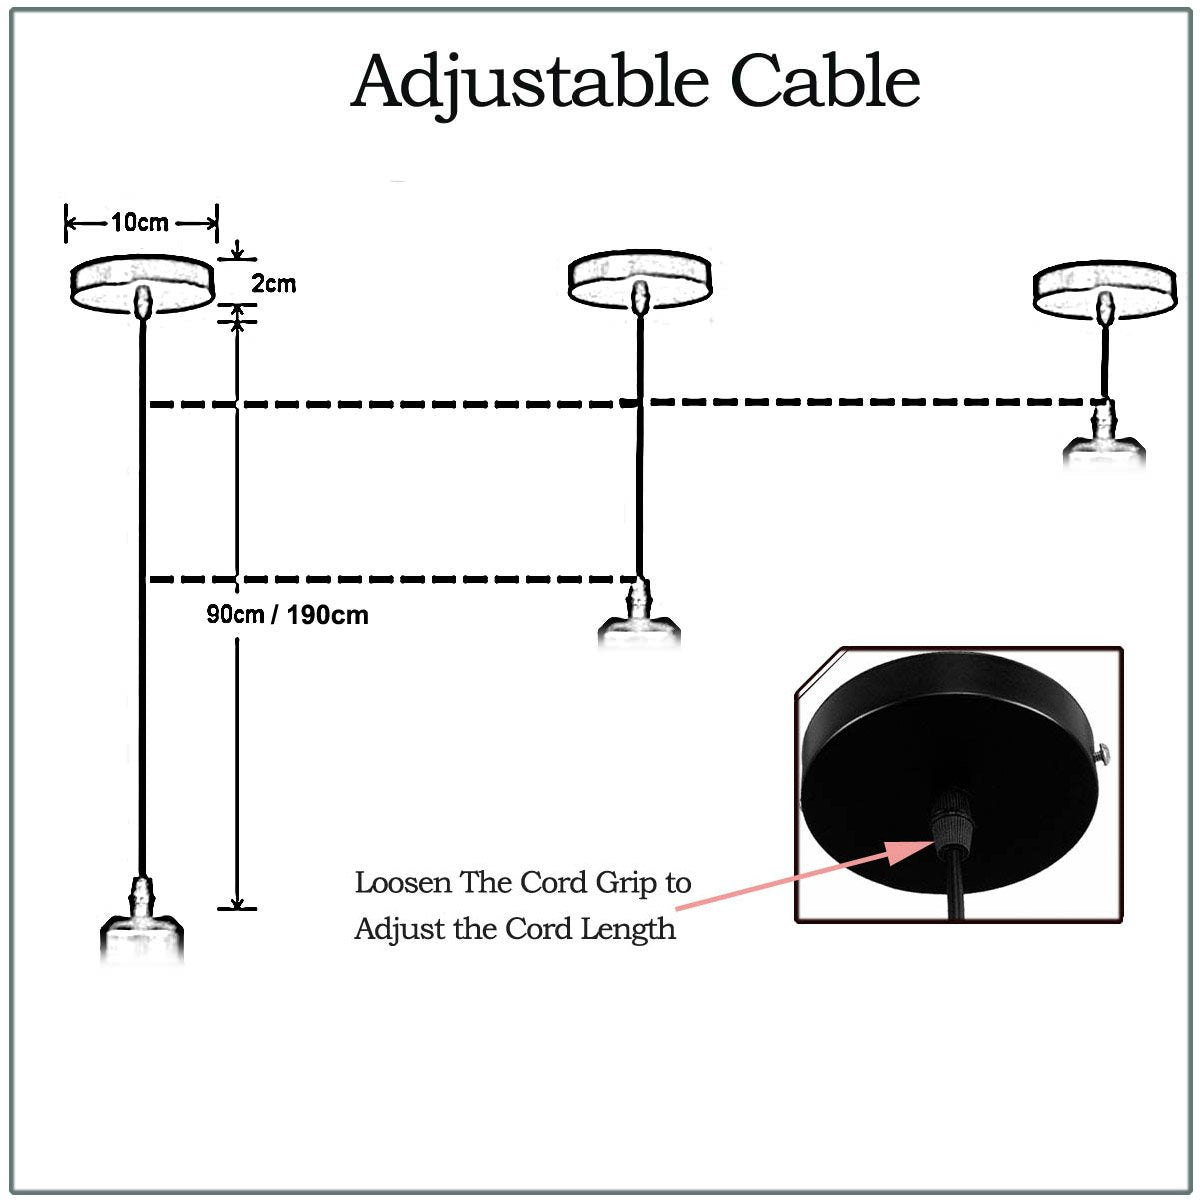 1m Black Round Cable E27 Base Black Holder~1716 - LEDSone UK Ltd